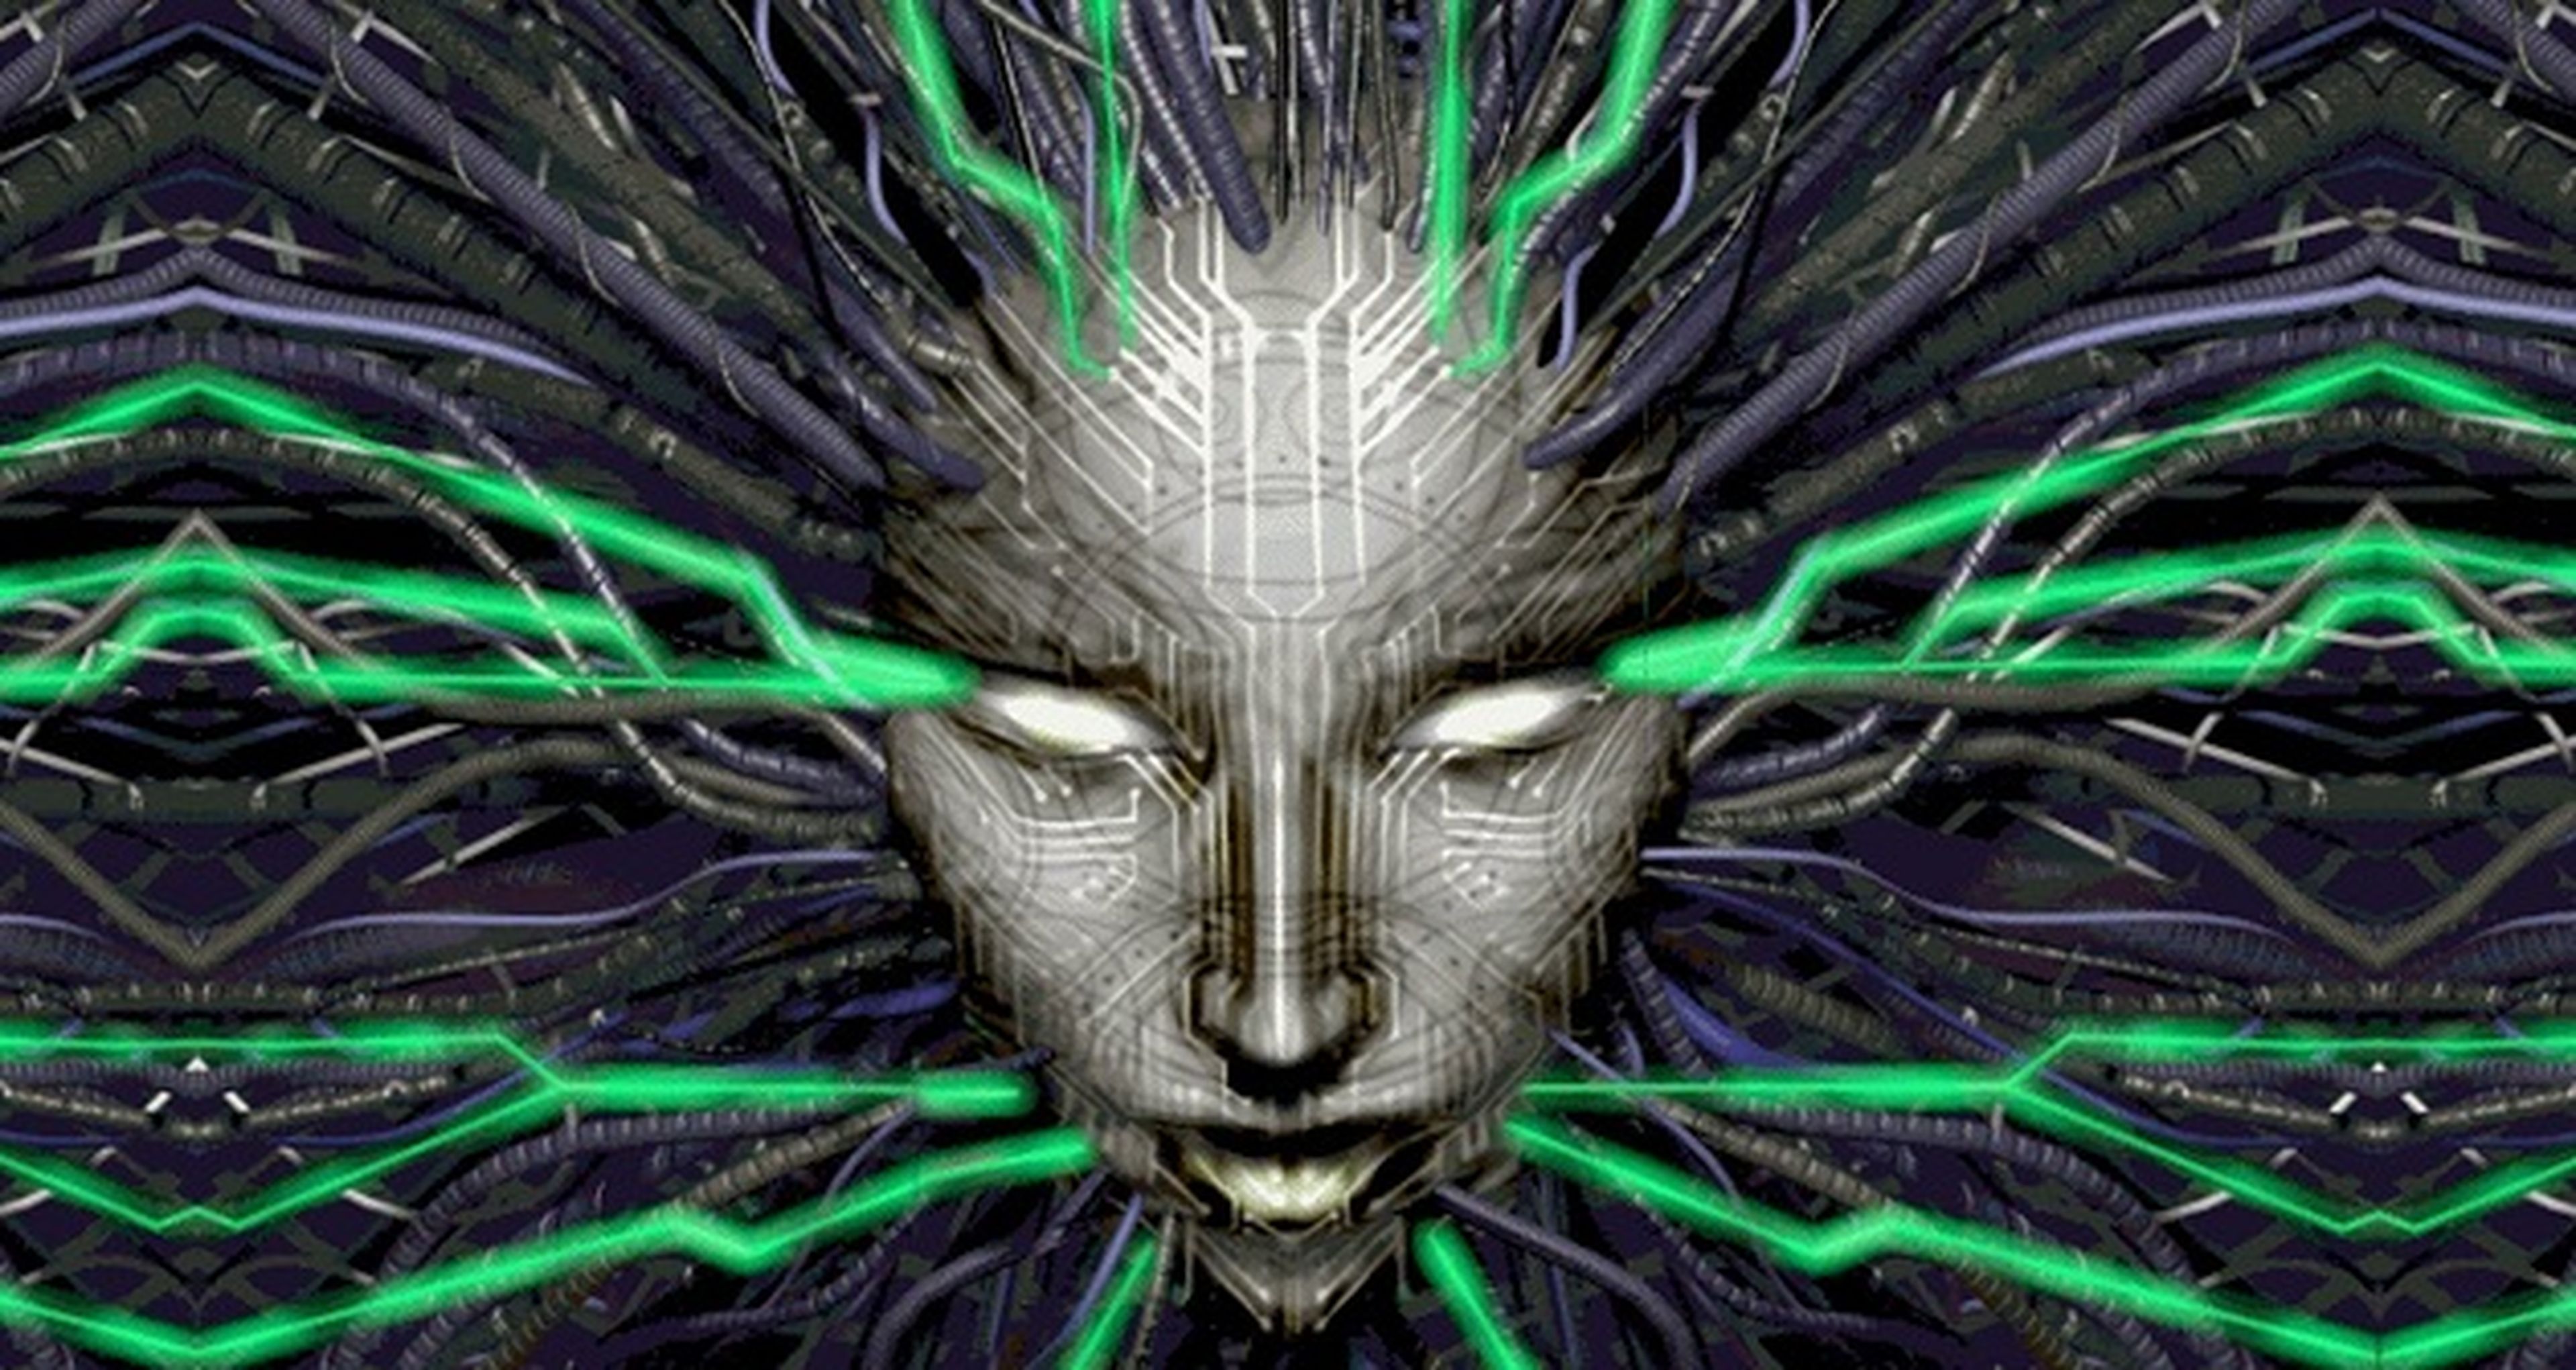 System Shock Remastered - Campaña de financiación en Kickstarter